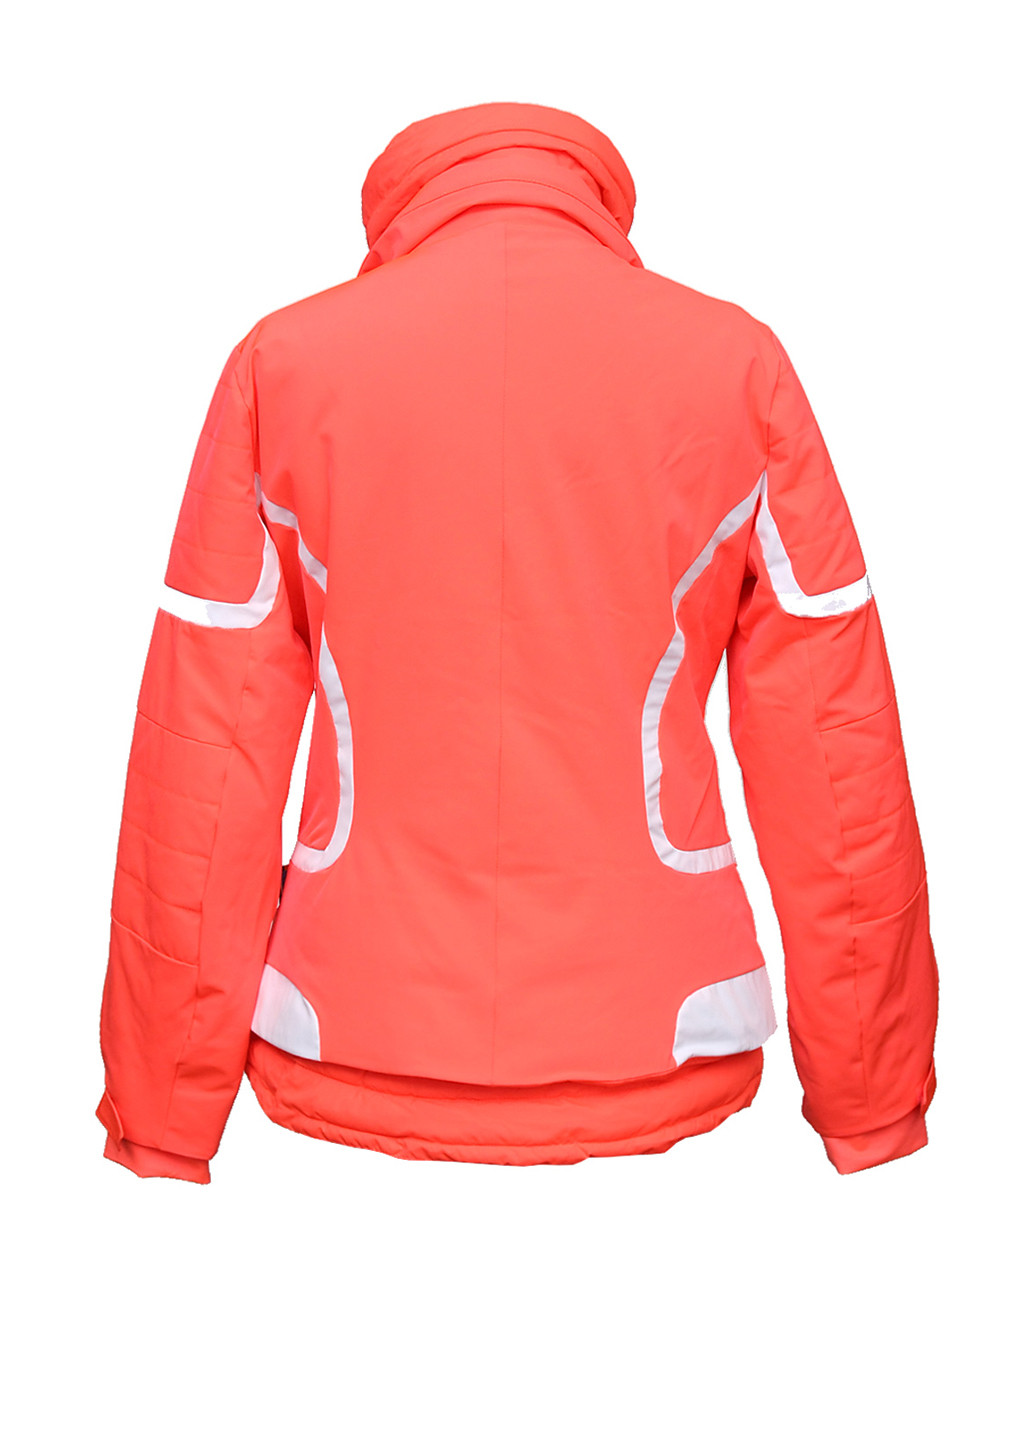 Кислотно-розовая зимняя куртка Snow Headquarter